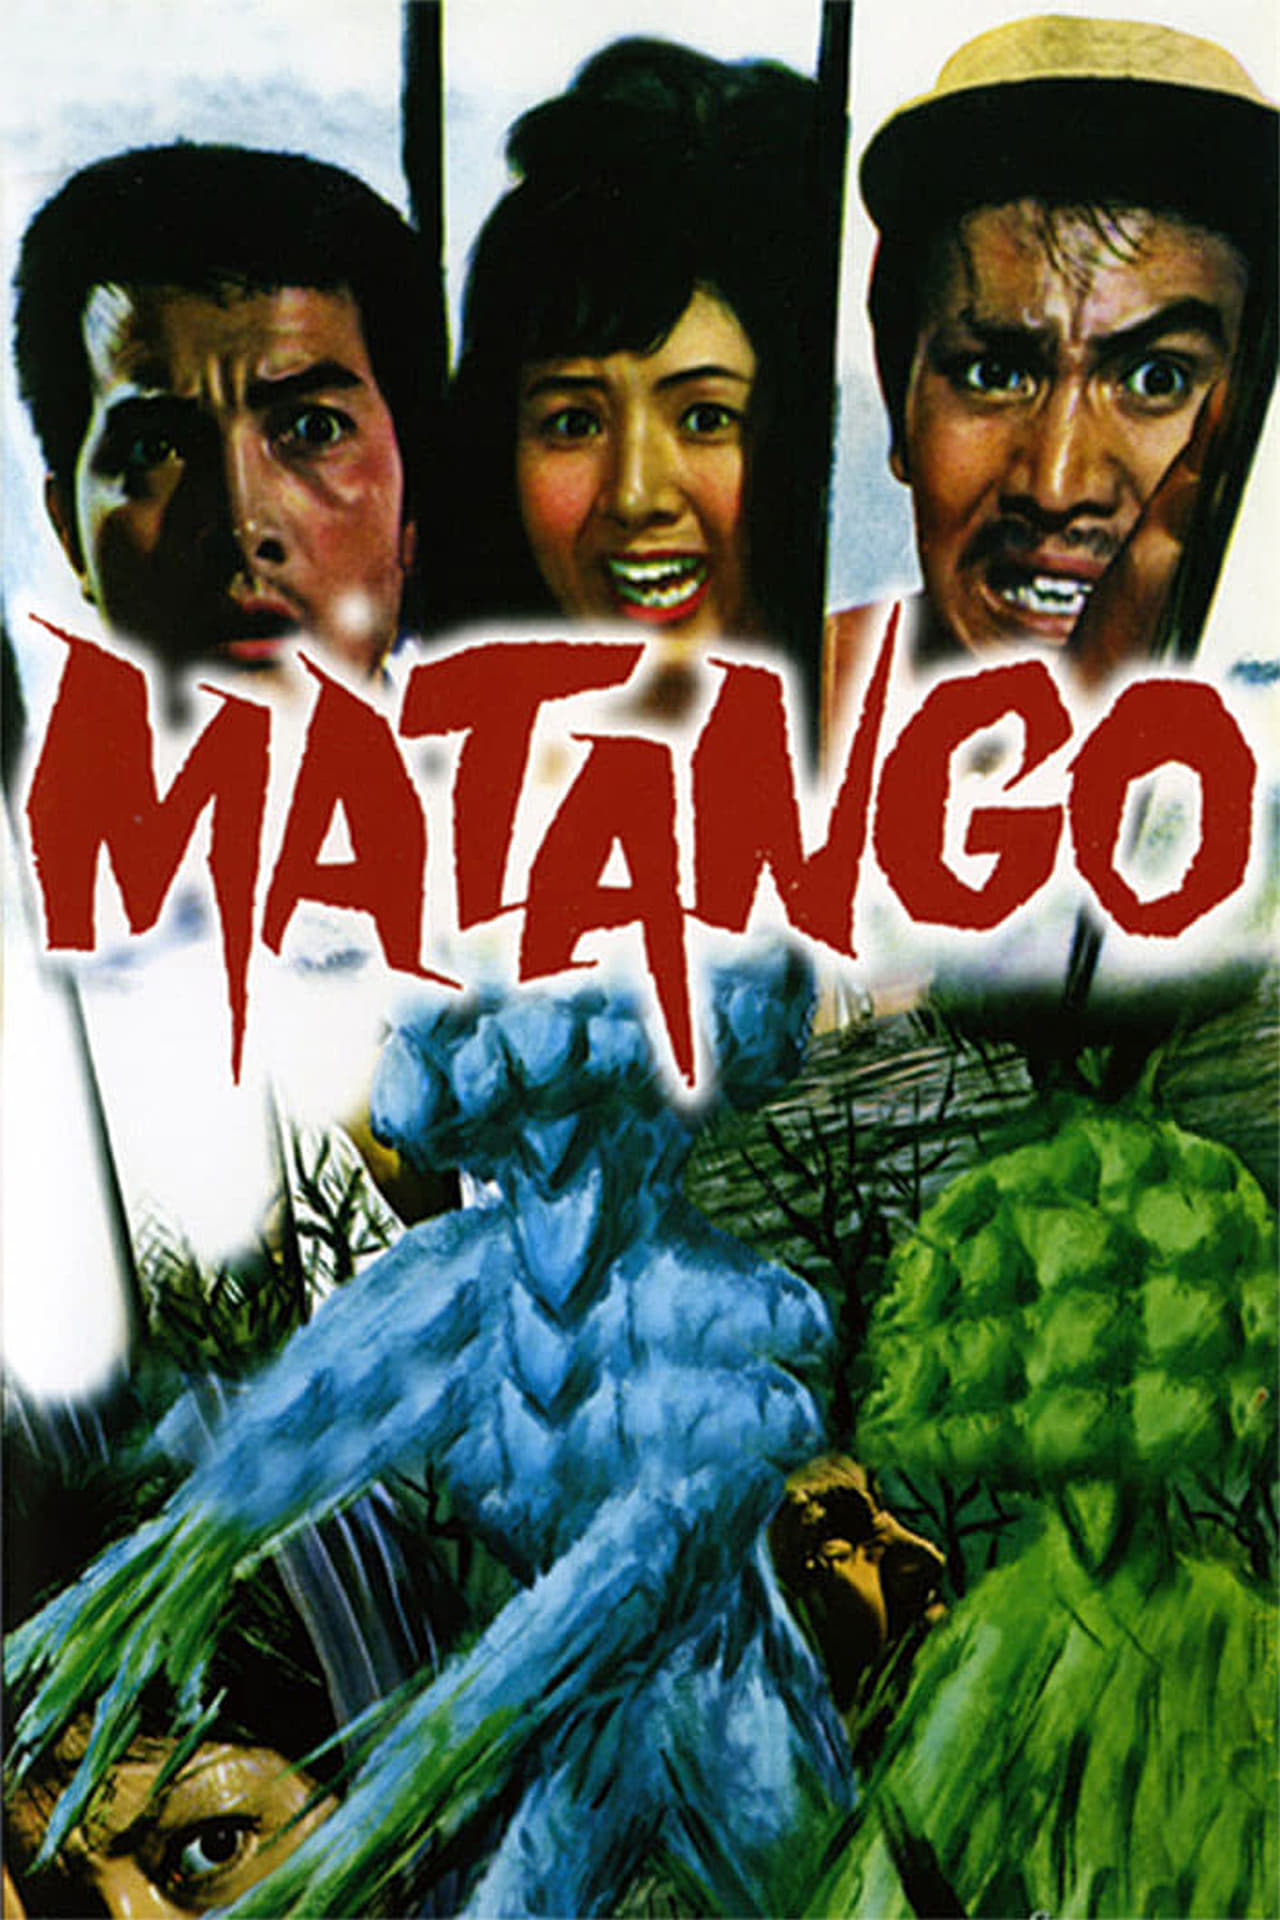 Matango poster